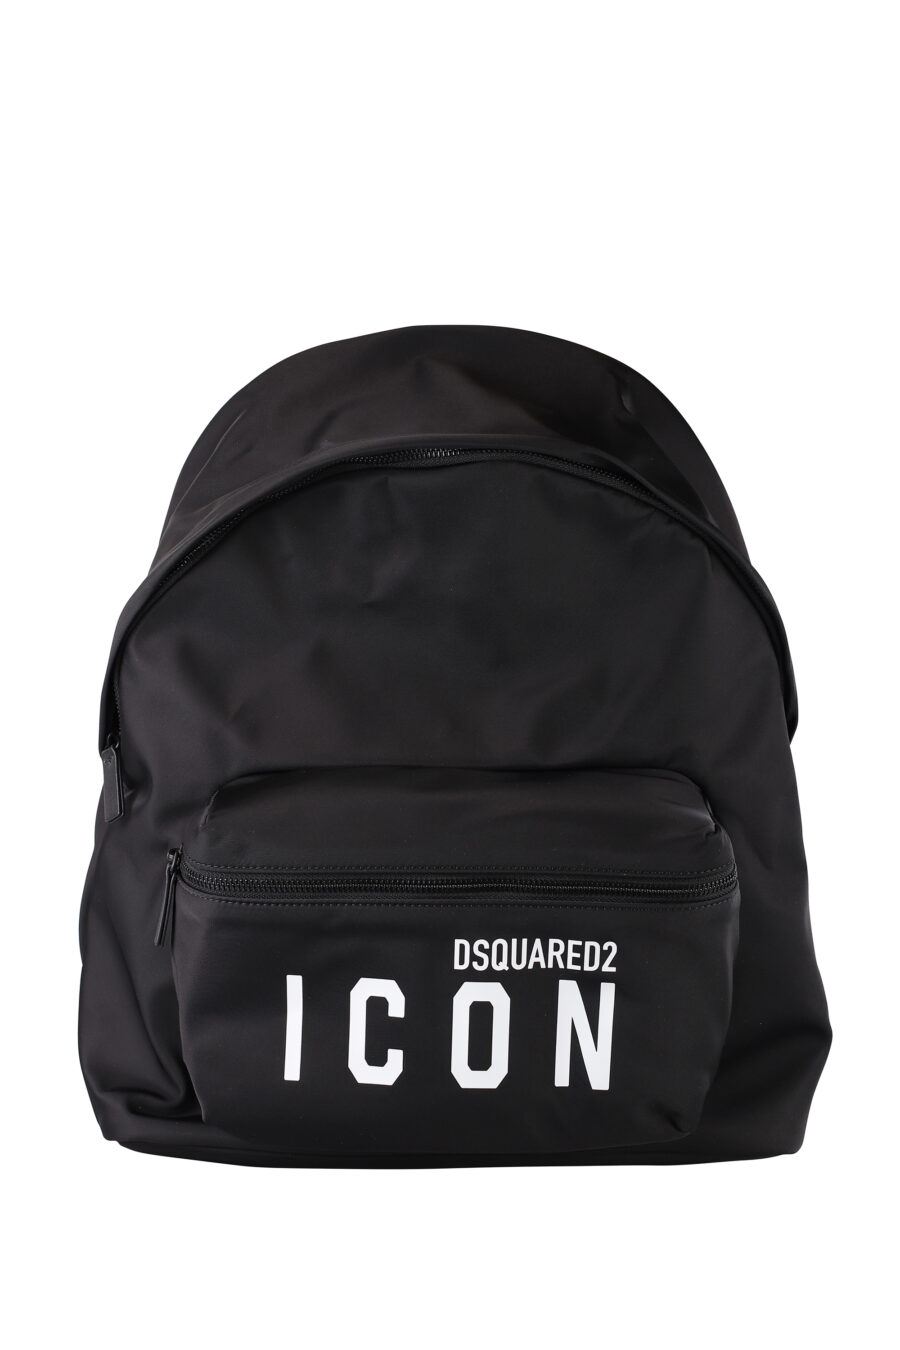 Sac à dos noir avec logo "icon" blanc - IMG 1299 1